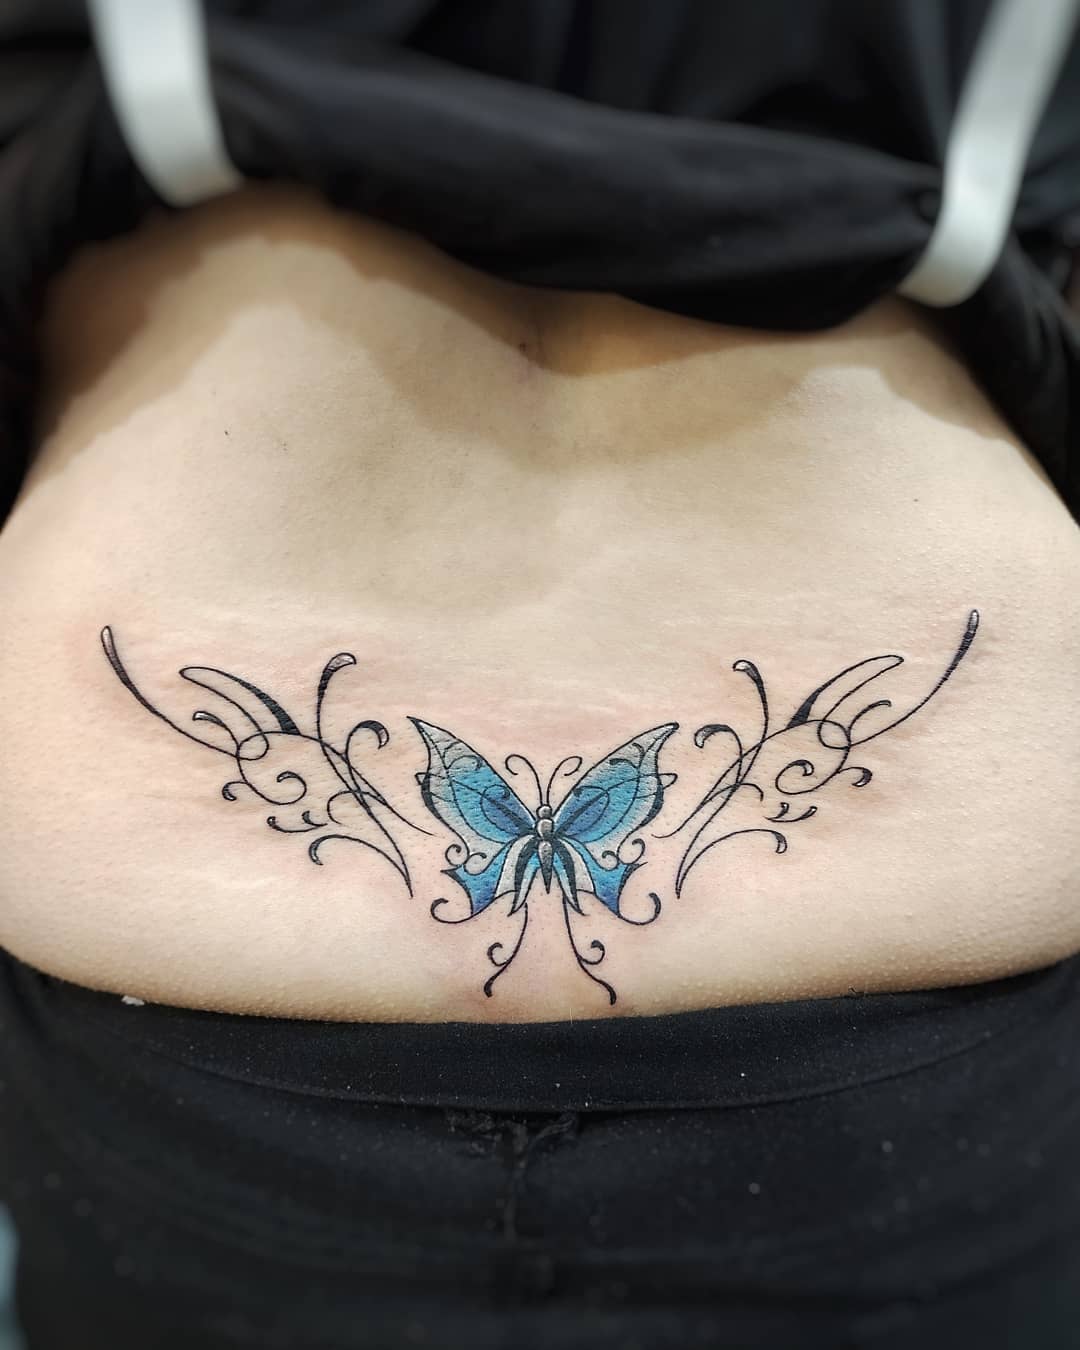 Tatuaje de mariposa